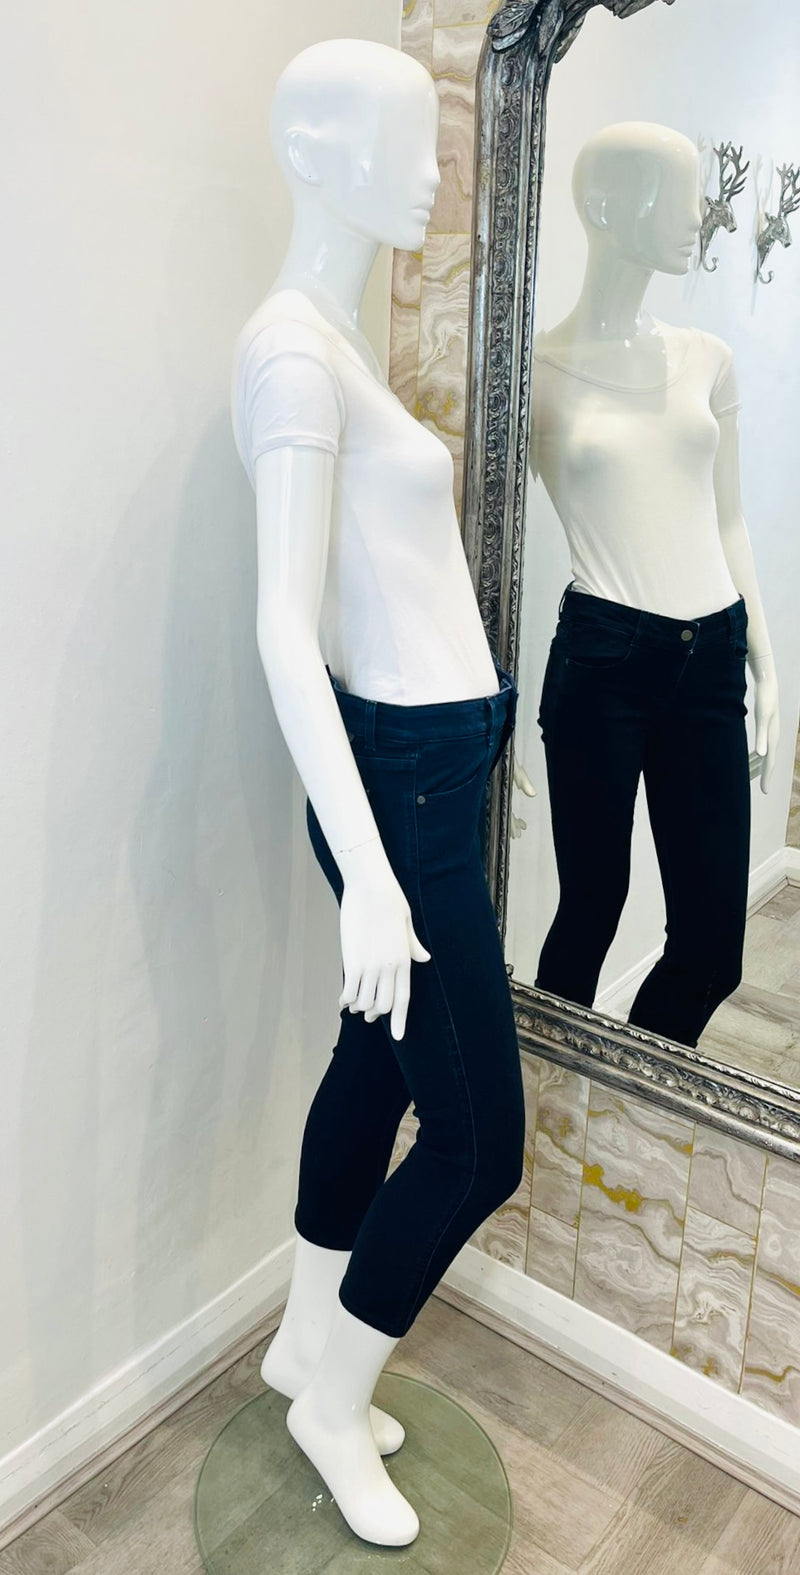 Stella McCartney Cropped Skinny Cotton Jeans. Size 26